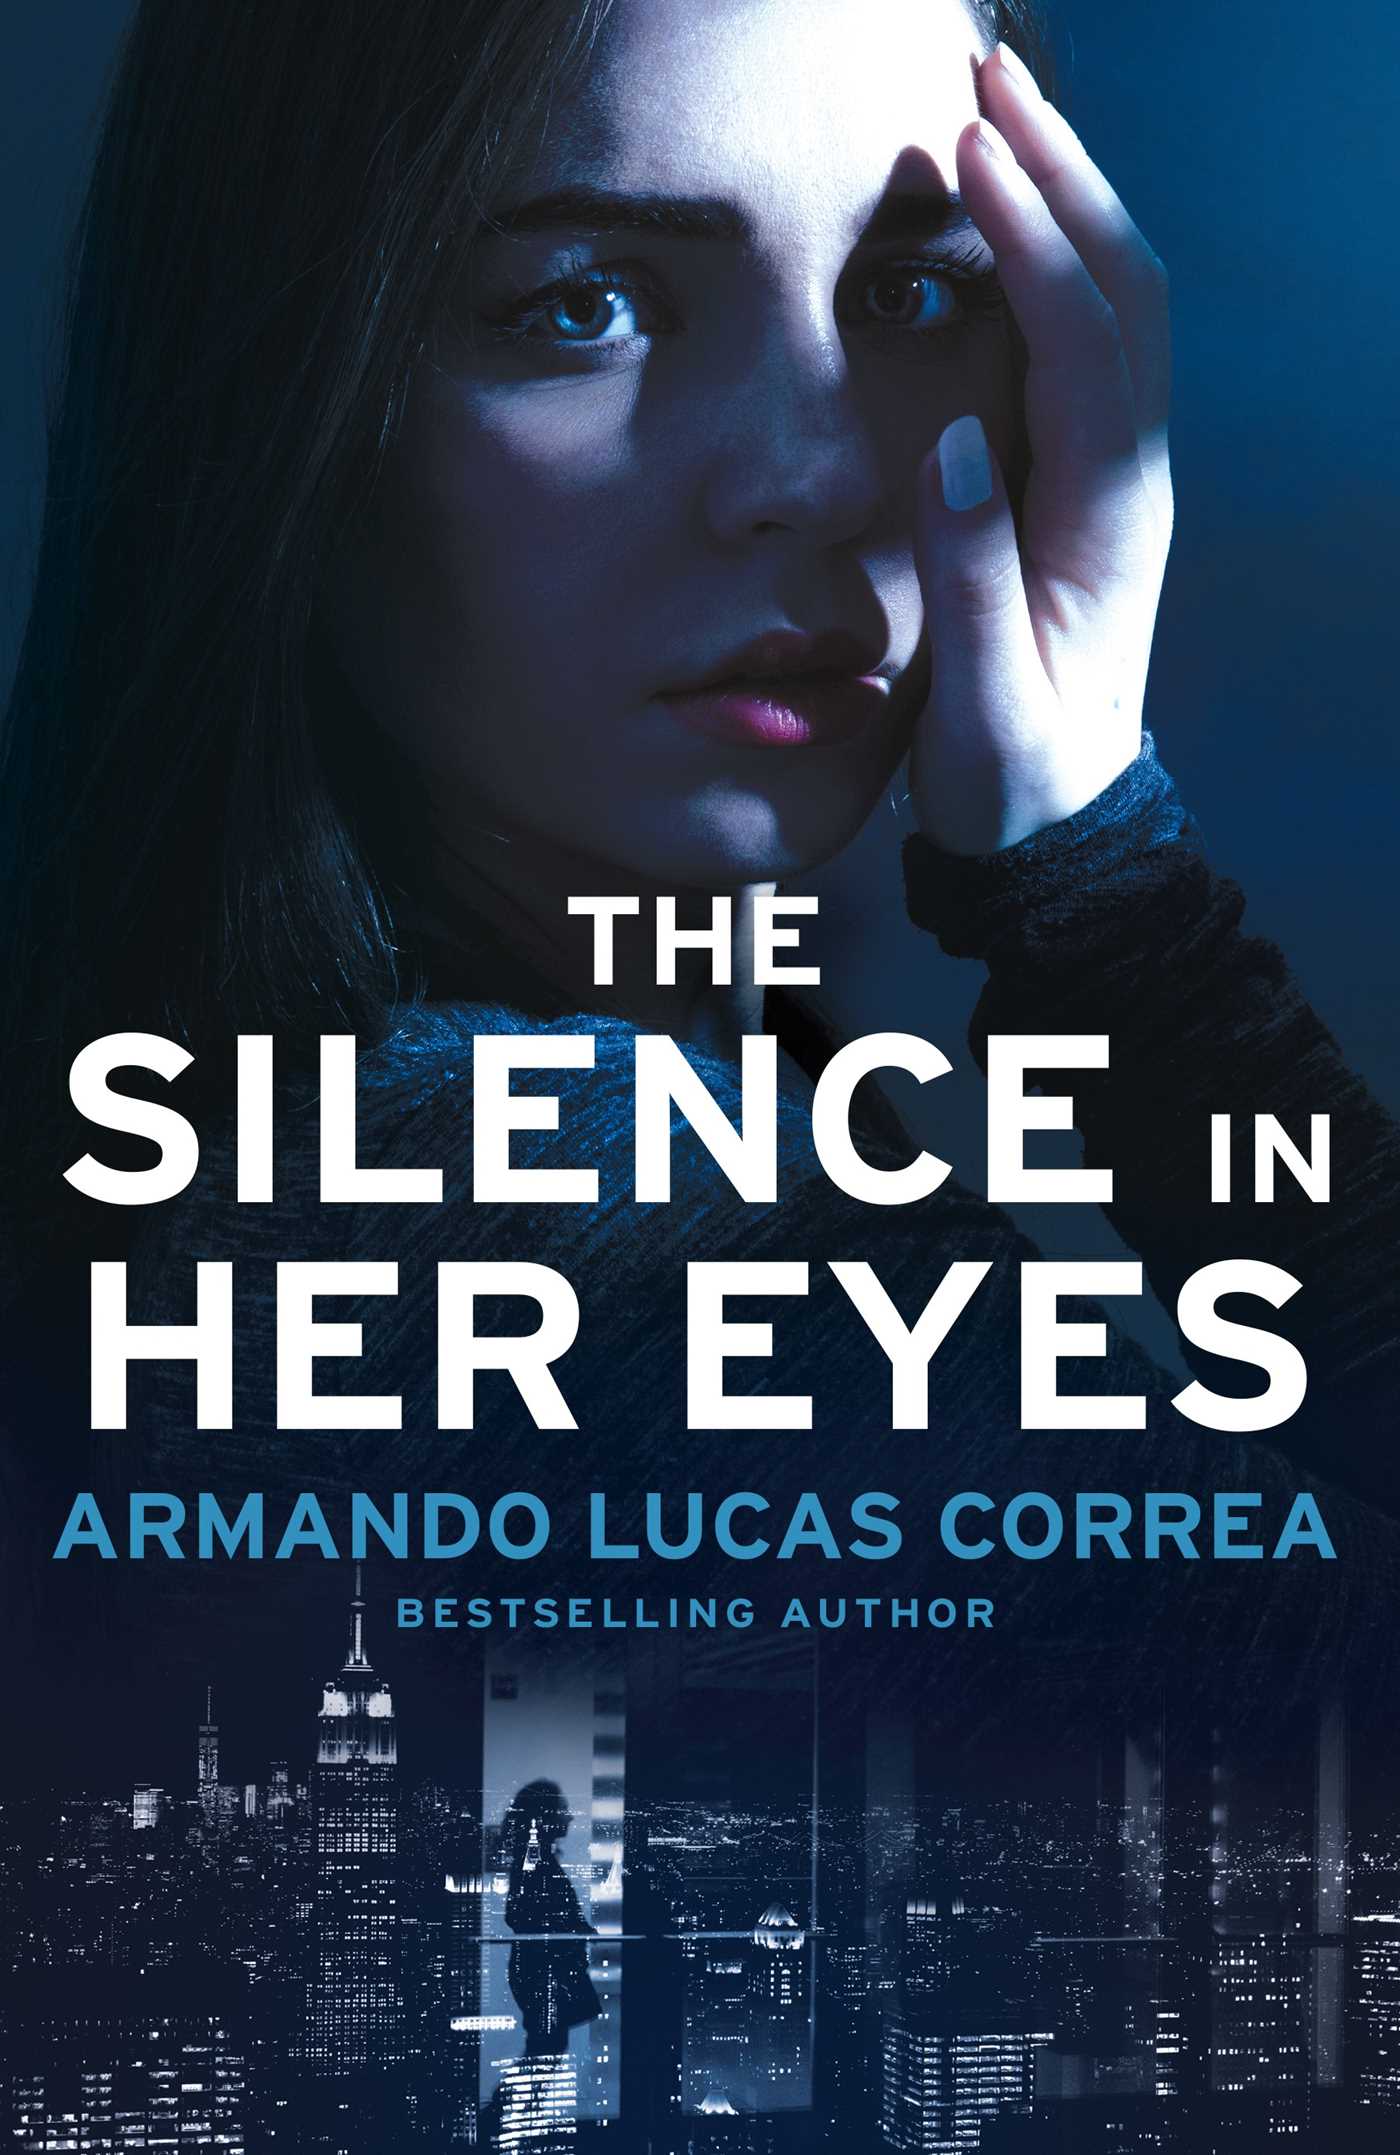 The Silence in Her Eyes by Amando Lucas Correa